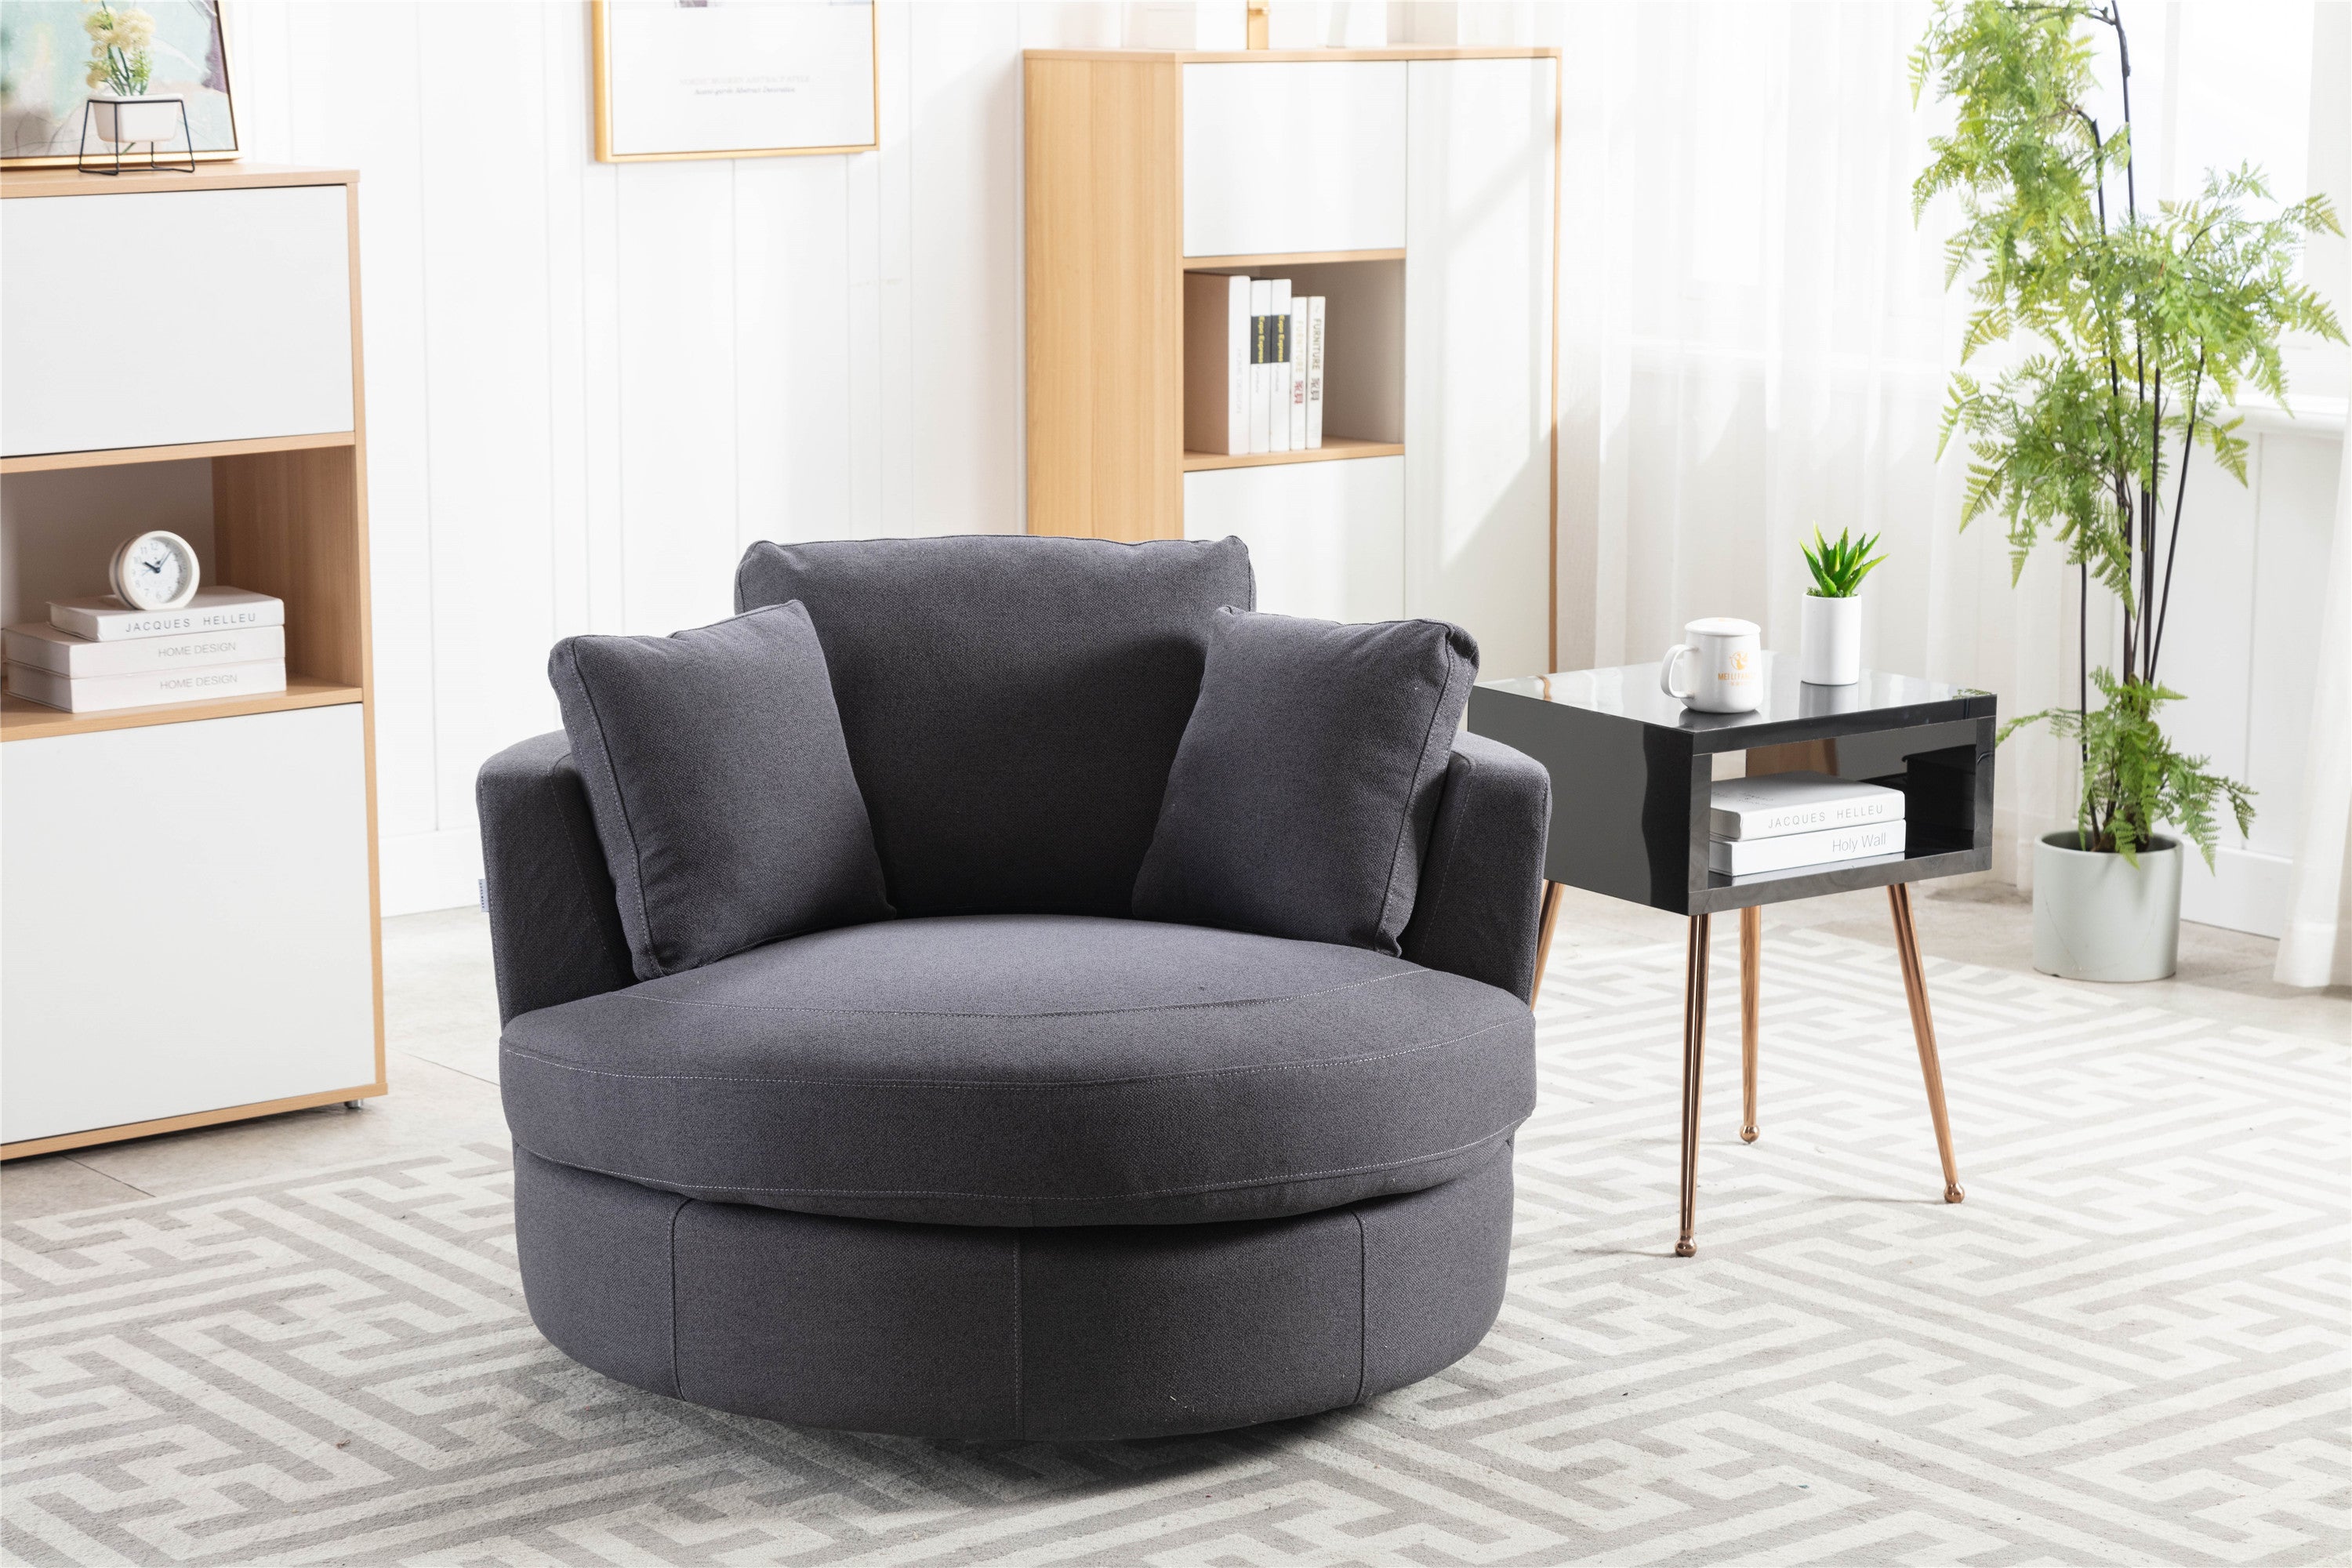 Modern  Akili swivel accent chair  barrel chair  for hotel living room Modern  leisure chair